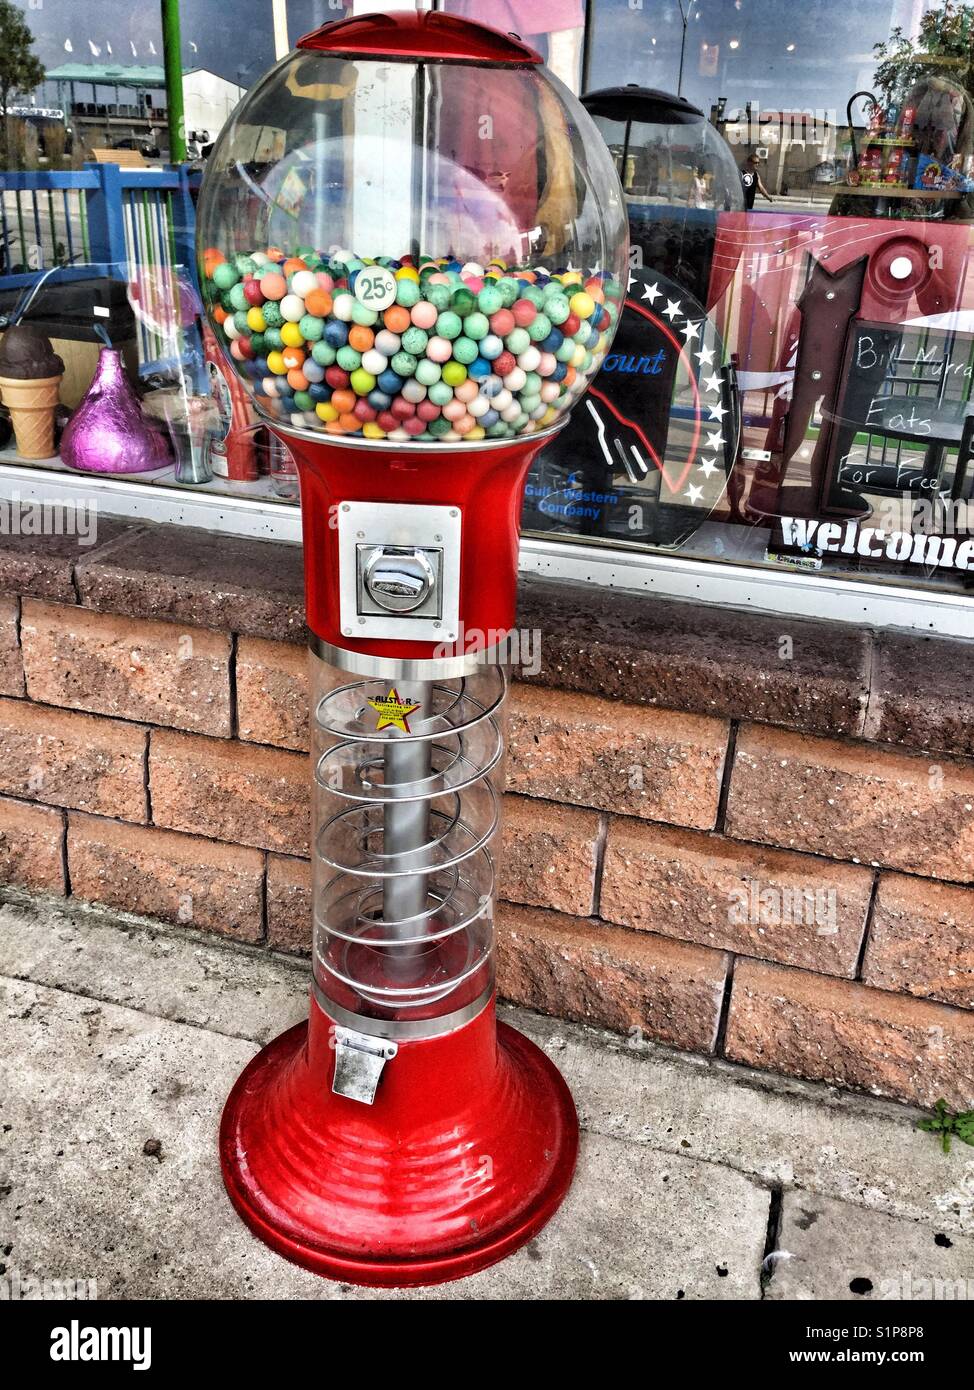 Old fashioned bubble gum vending machine Stock Photo - Alamy